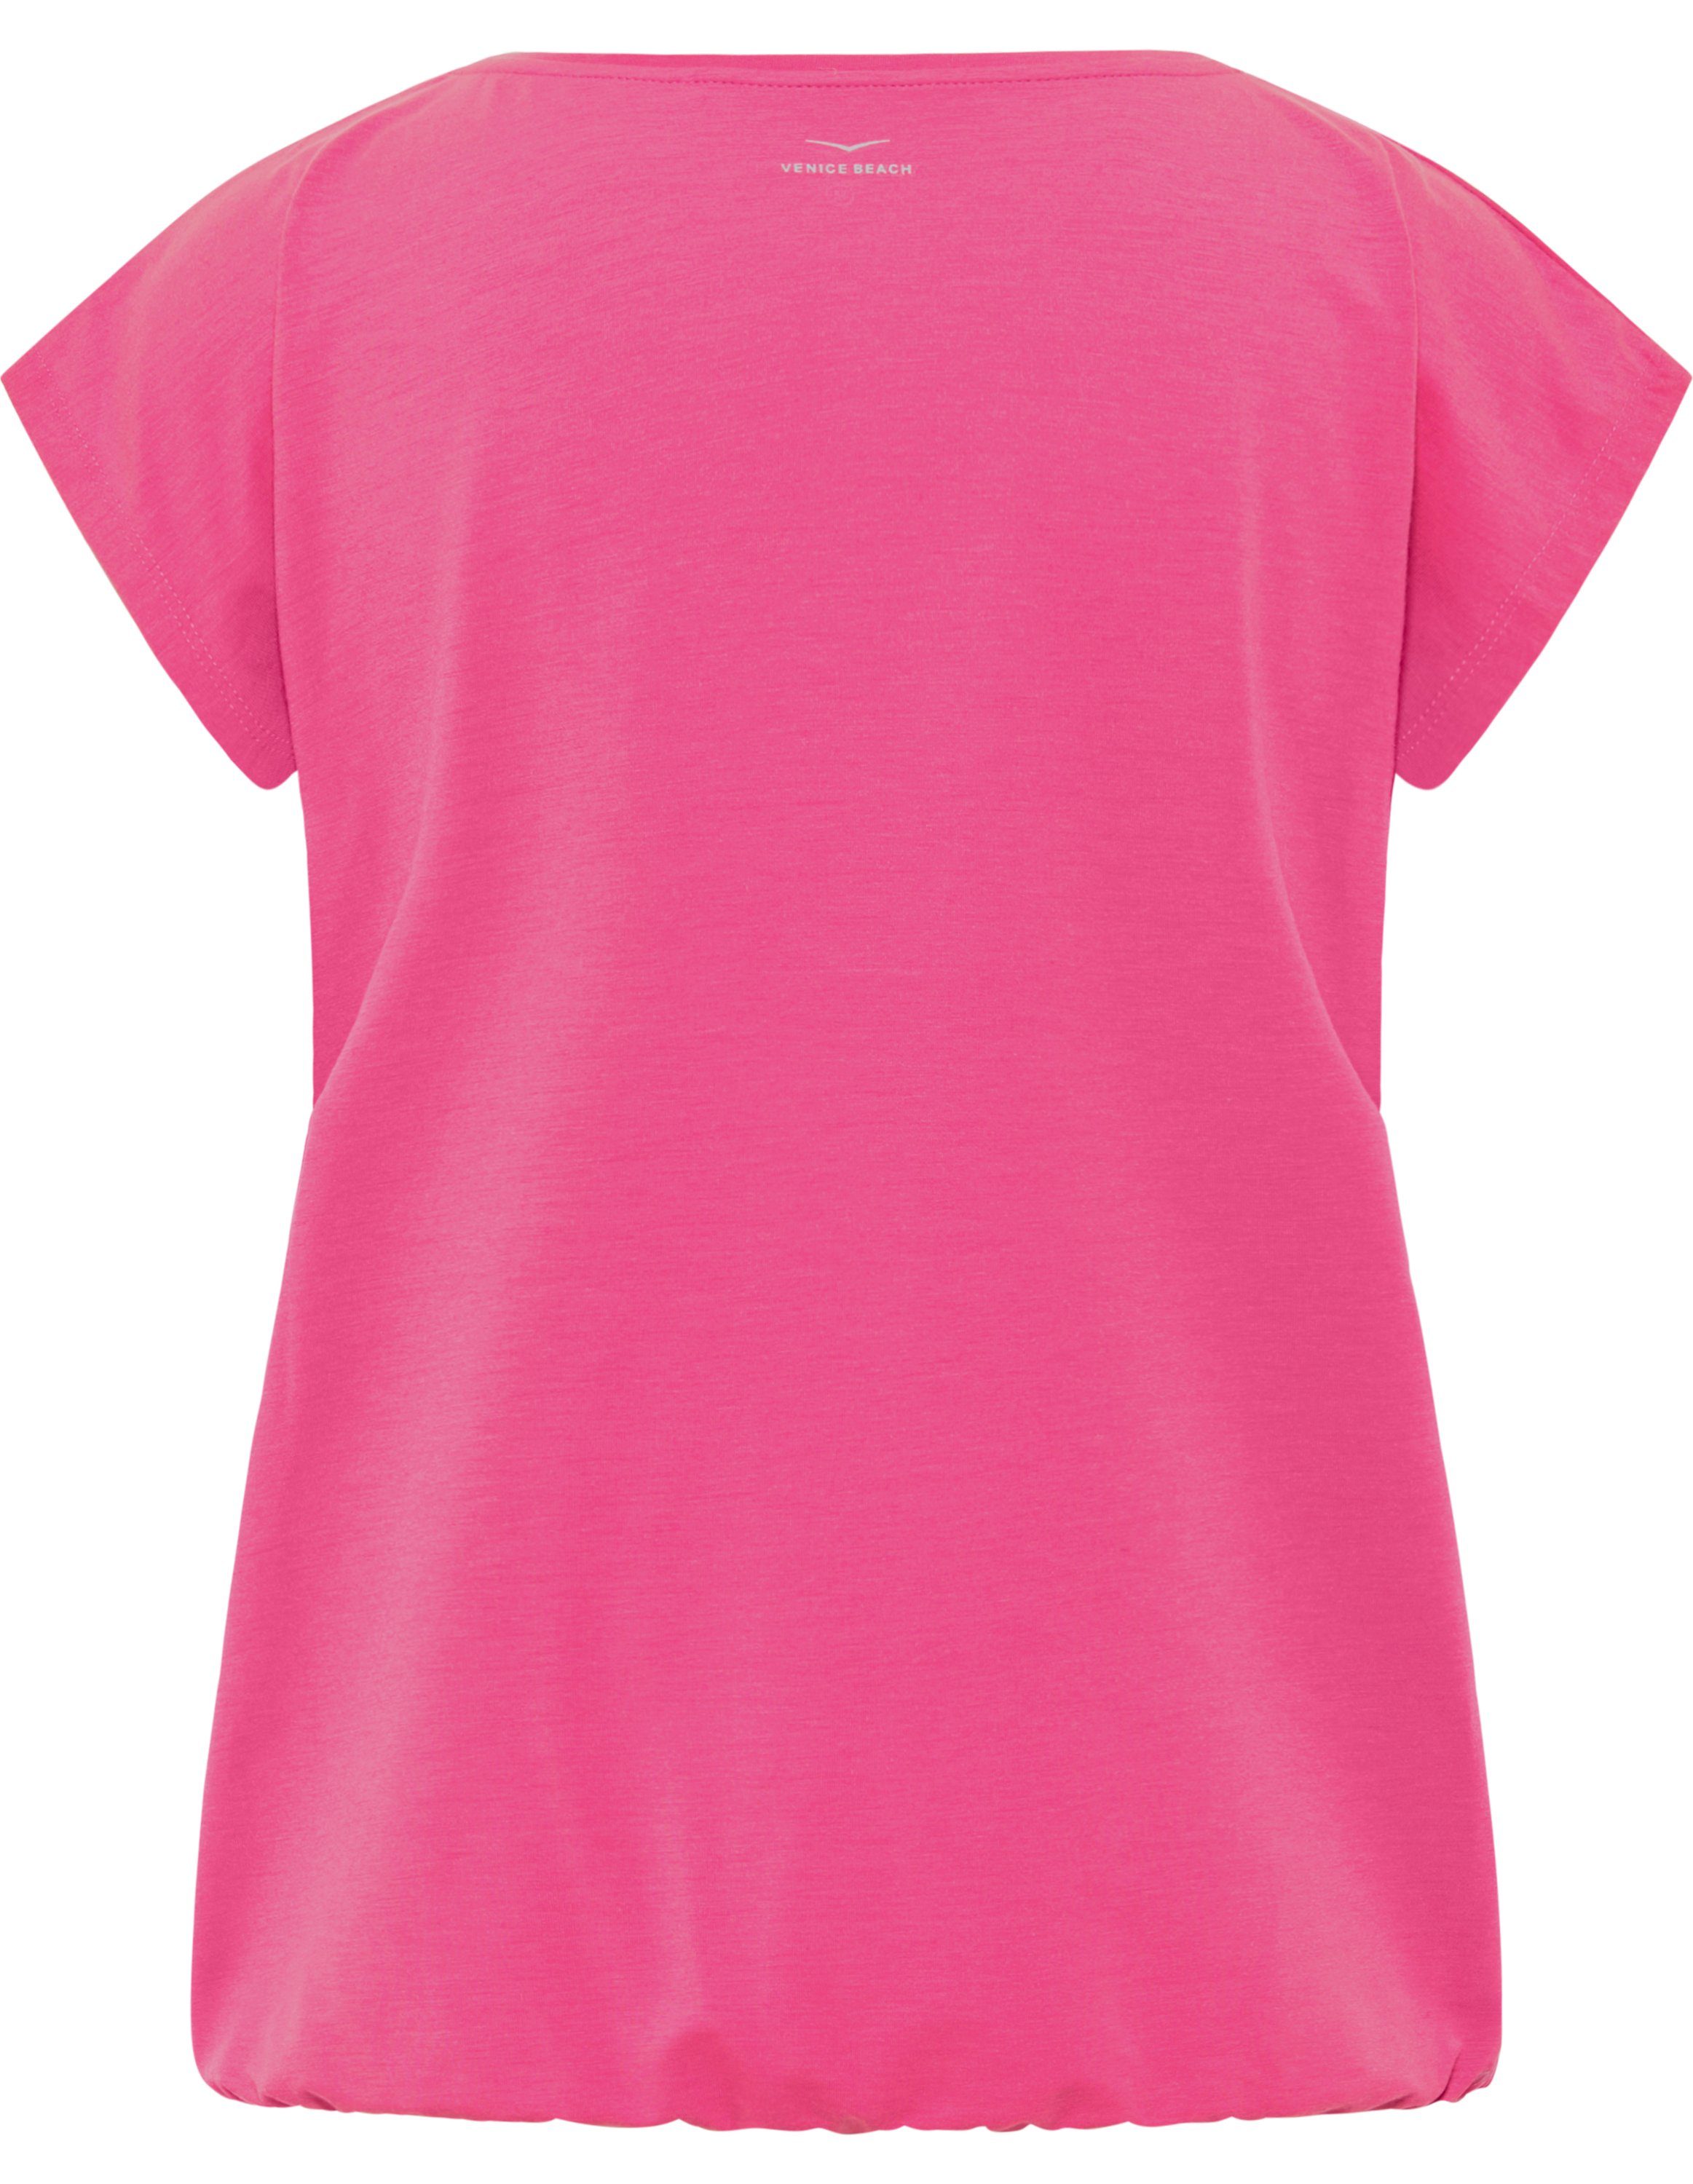 Beach T-Shirt pink sky T-Shirt WONDER Venice VB